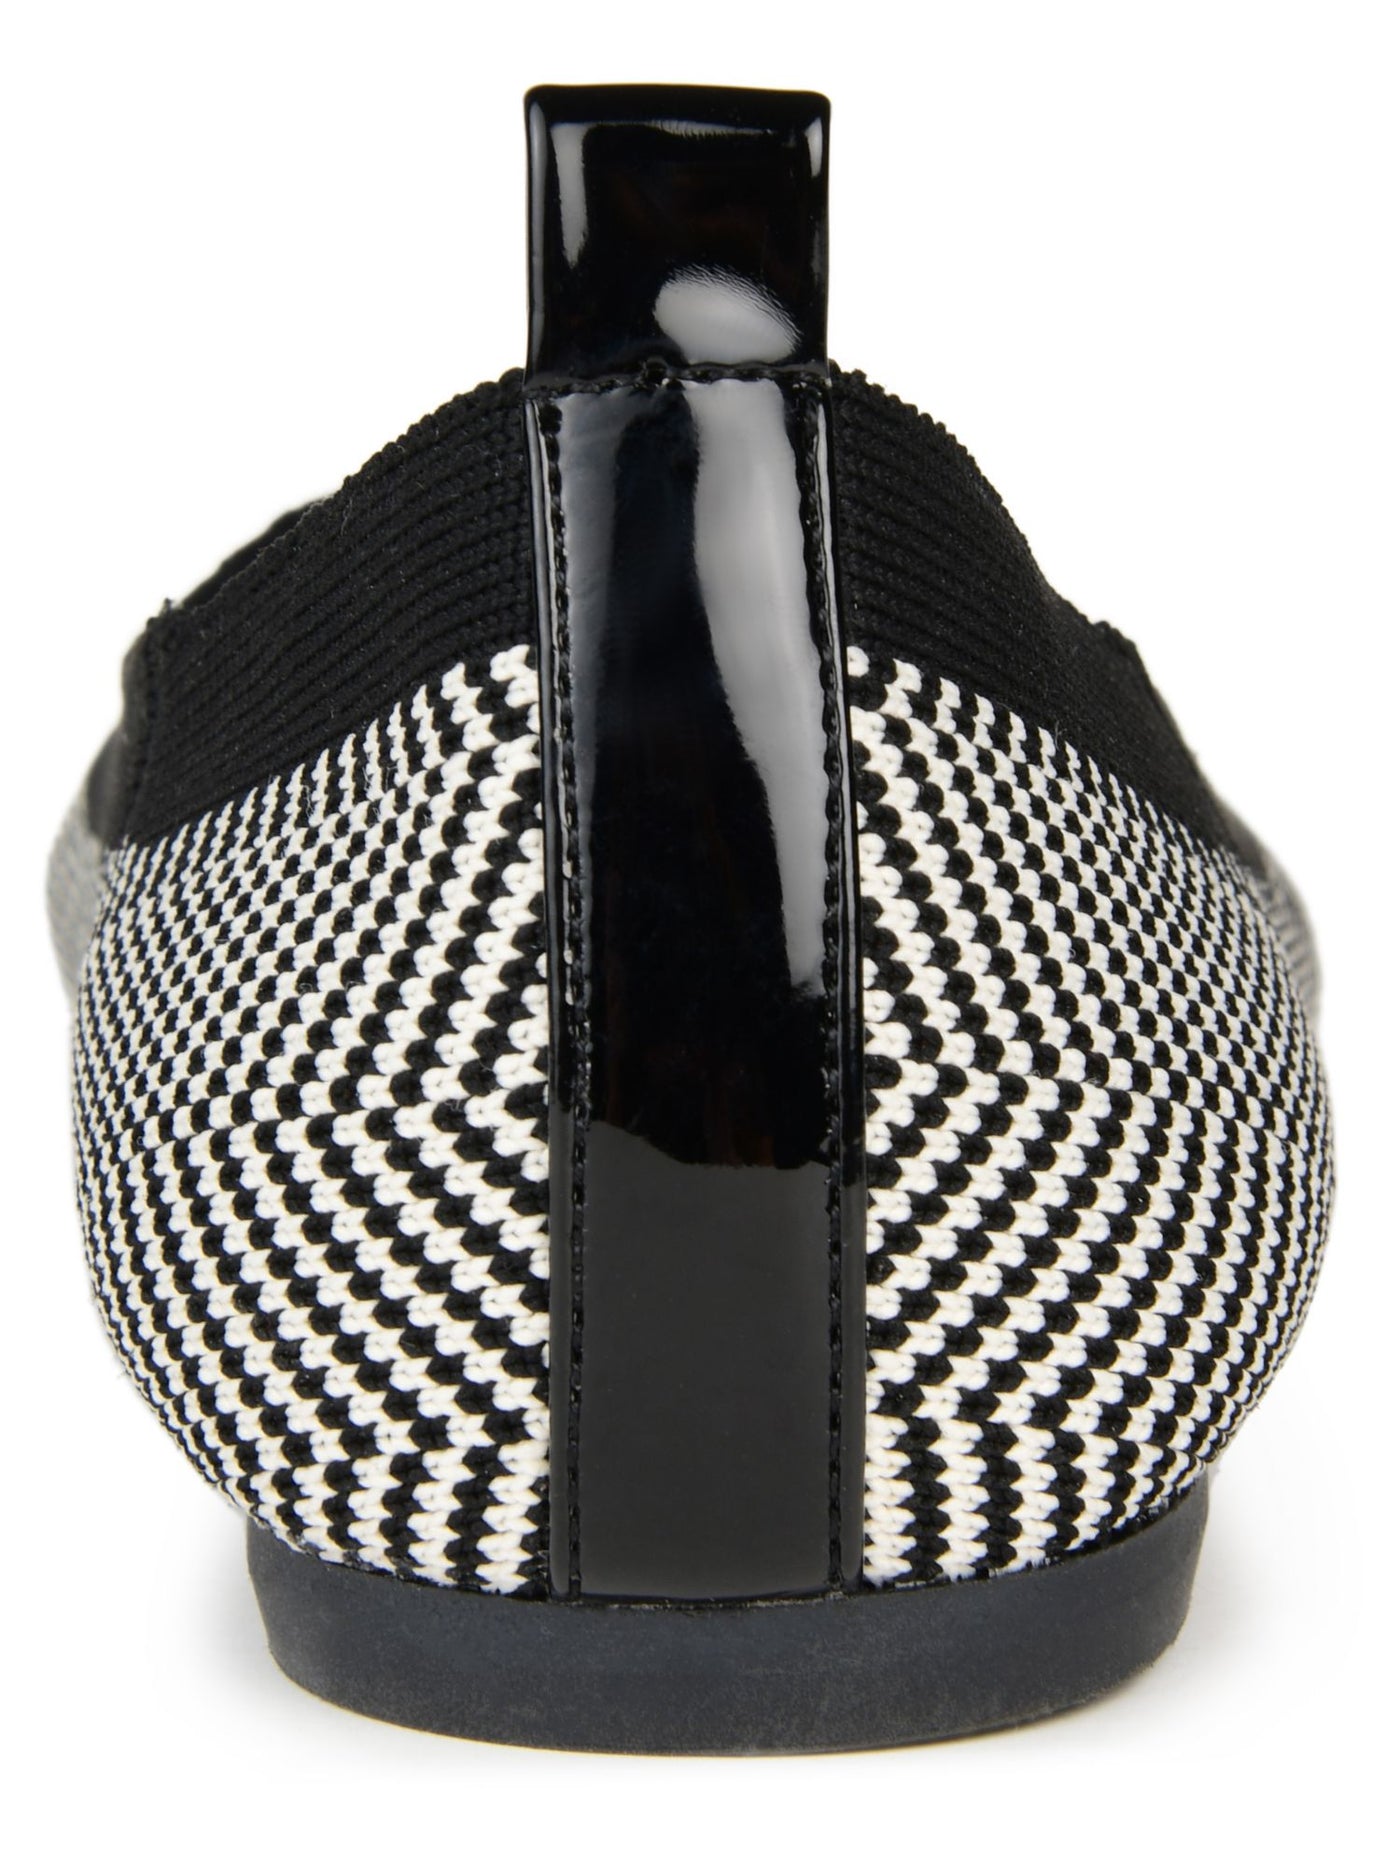 JOURNEE COLLECTION Womens Black Herringbone Dalmation Studded Padded Karise Pointed Toe Slip On Flats Shoes 8